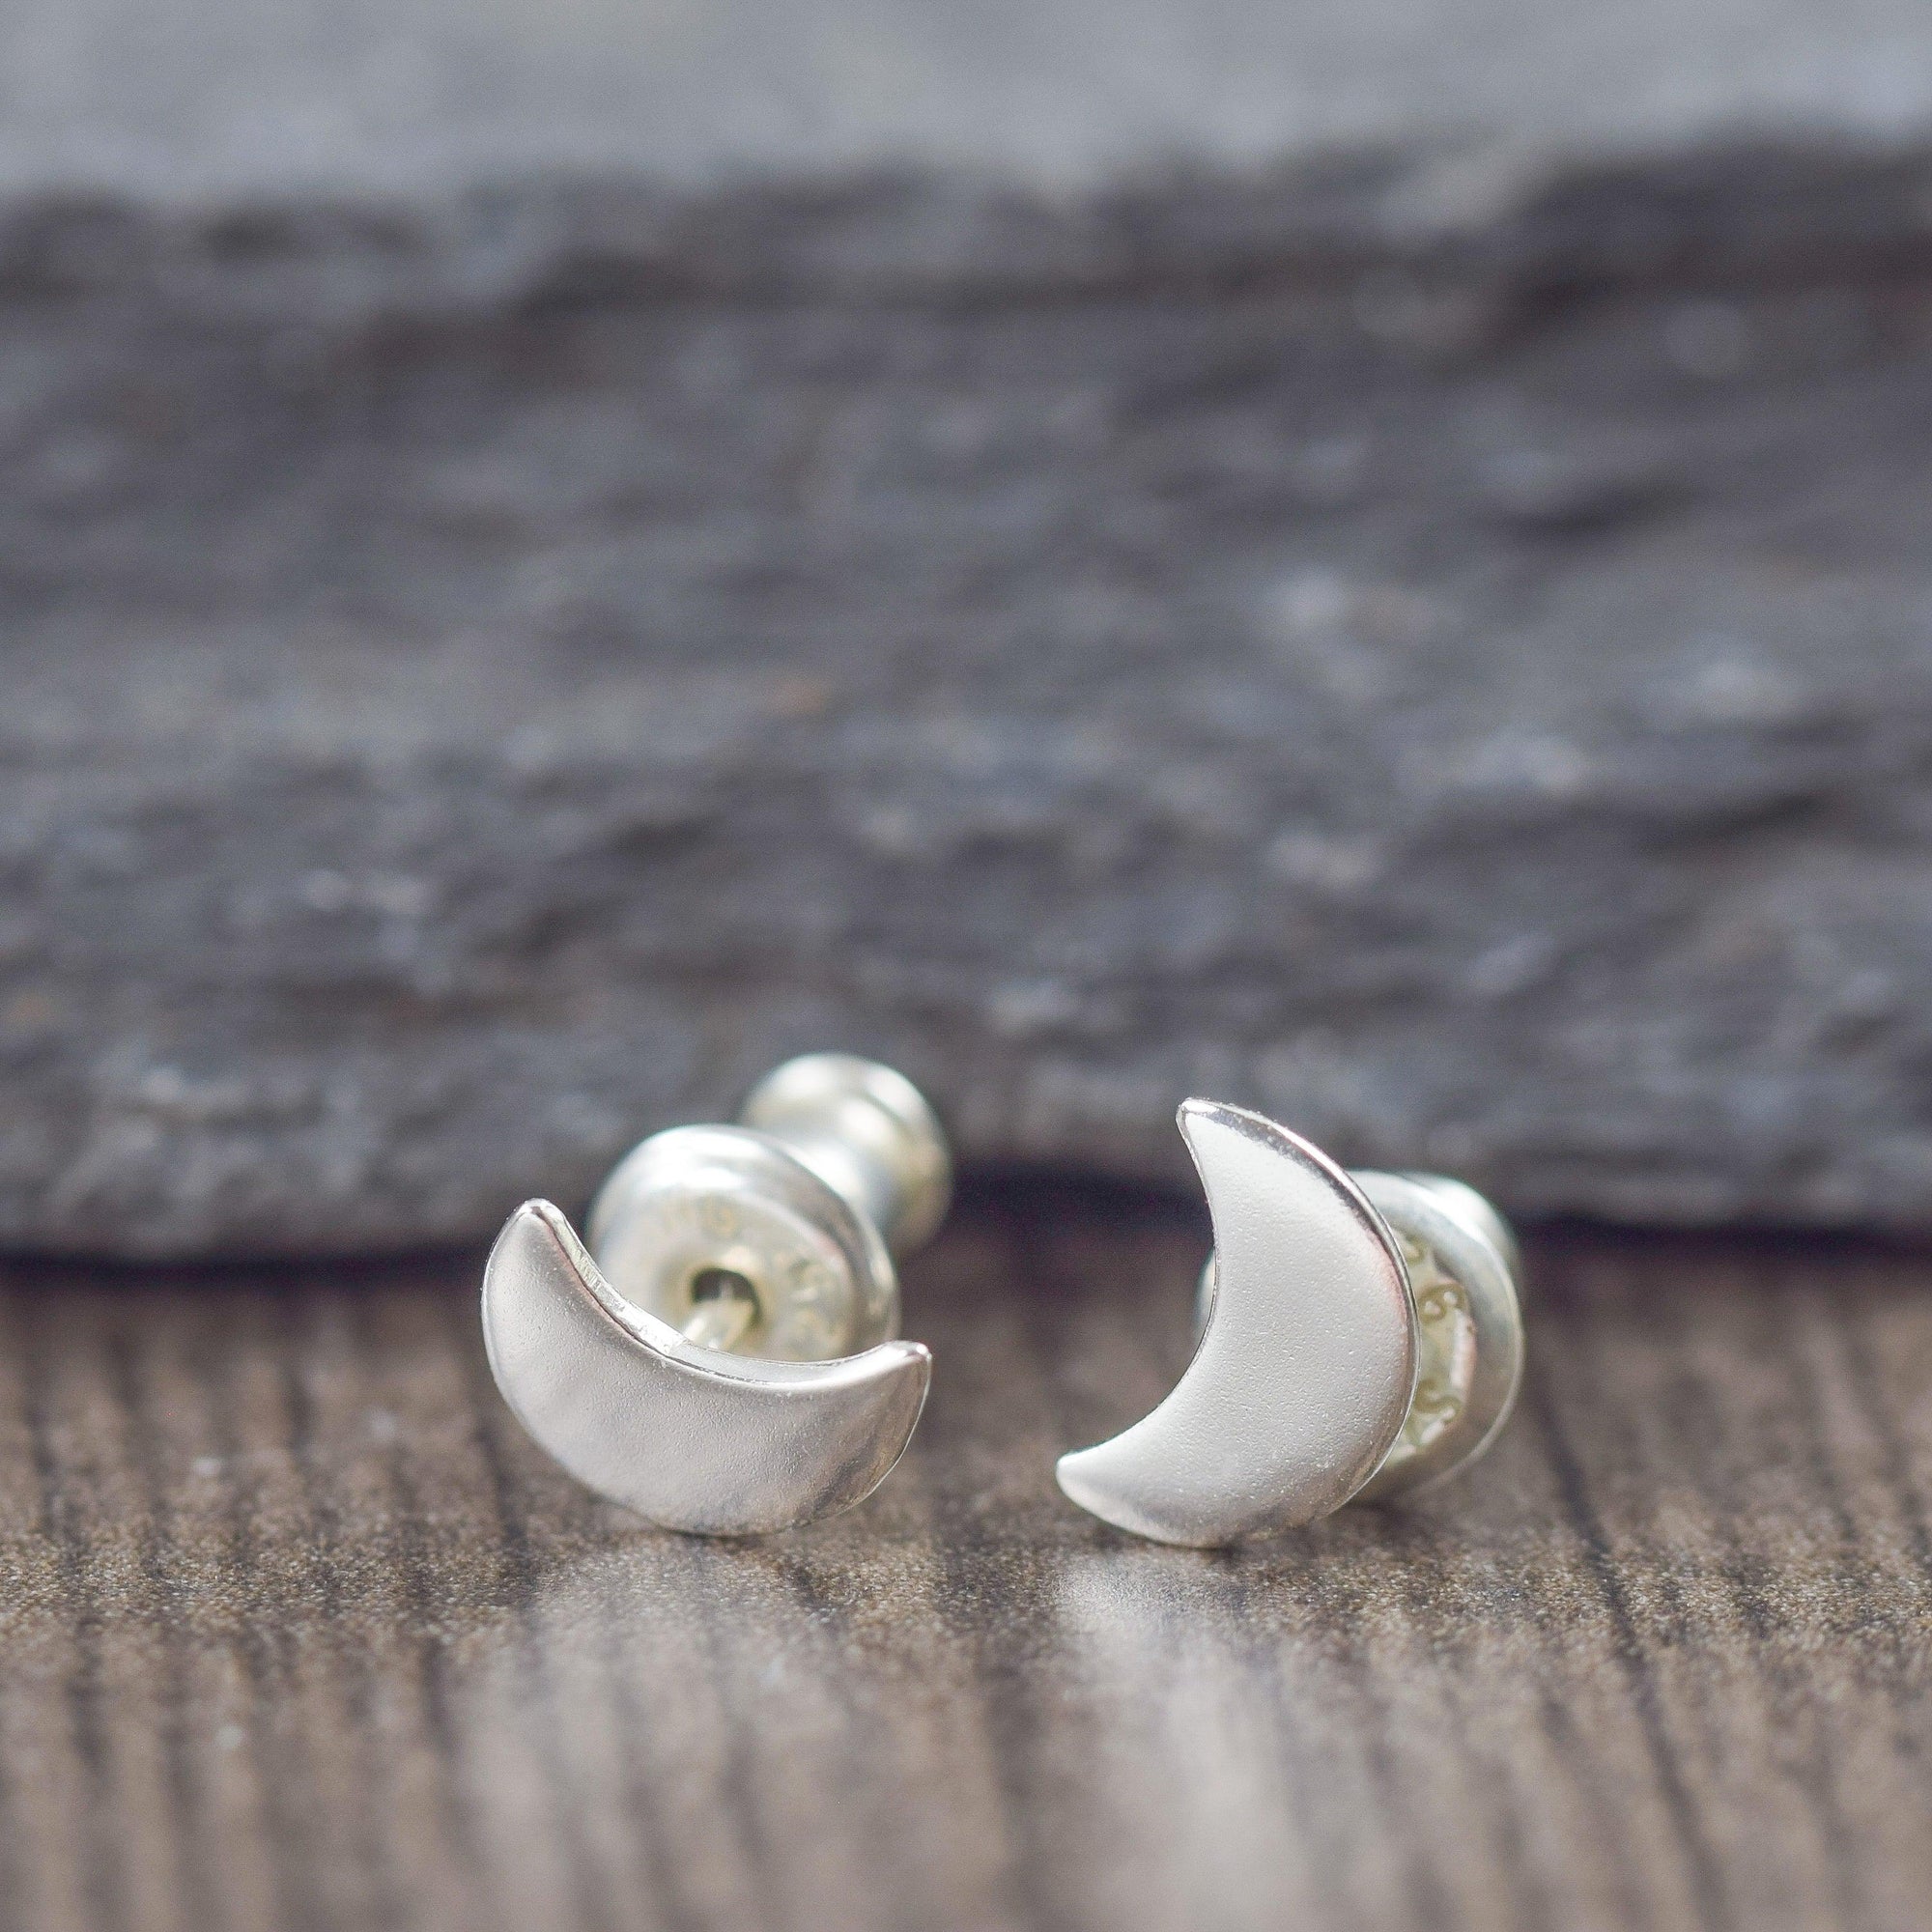 Crescent moon stud earrings in sterling silver